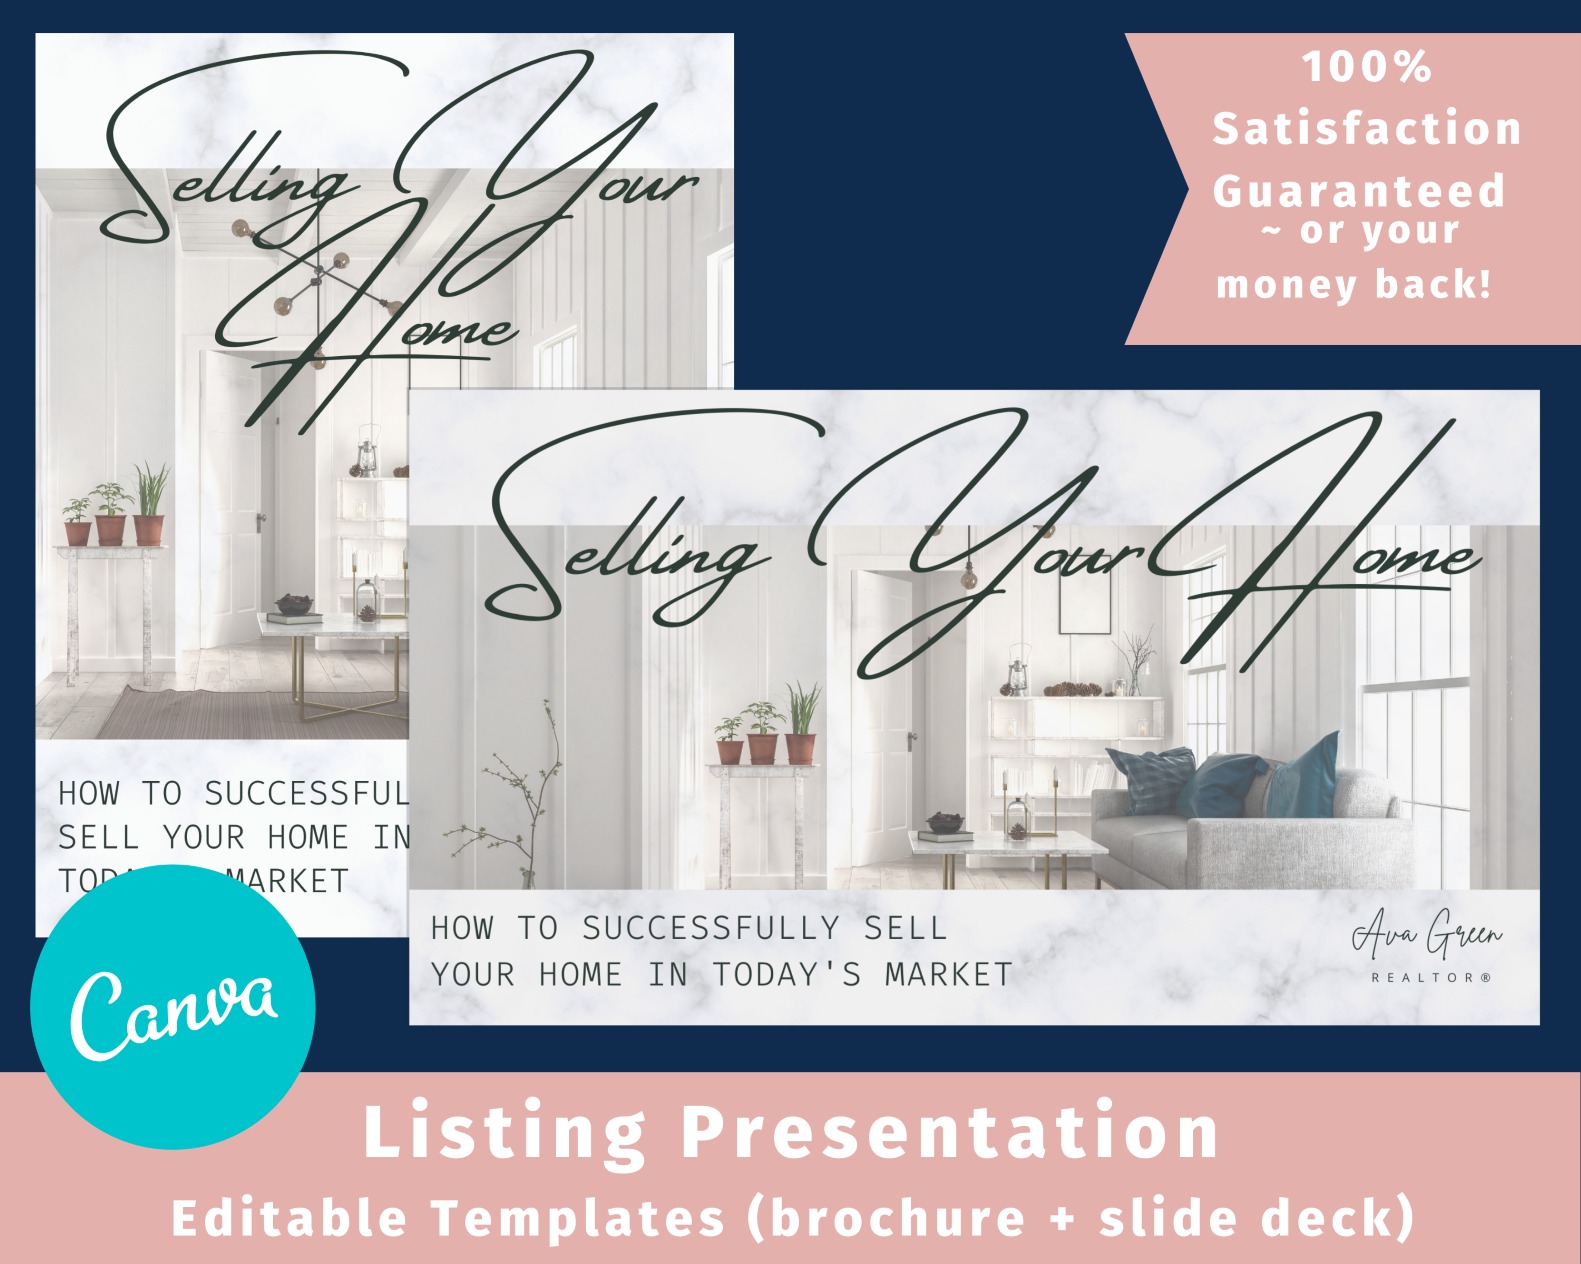 new real estate agent listing presentation